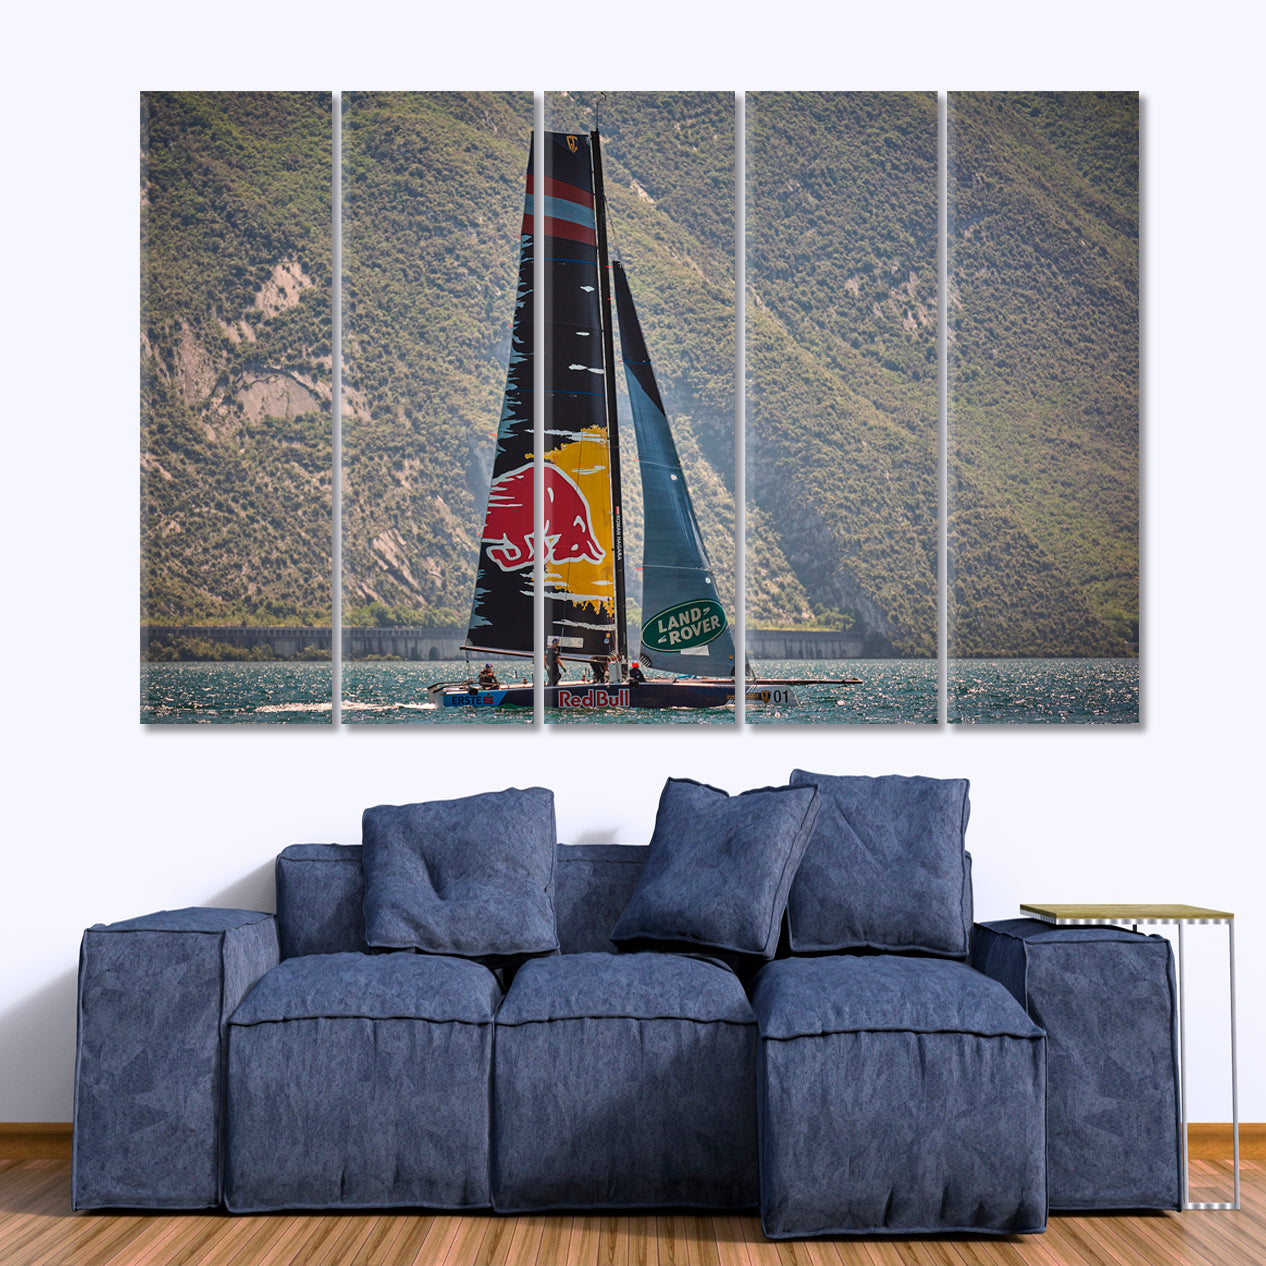 World Championship Sailing Speed Races Motivation Sport Poster Print Decor Artesty 5 panels 36" x 24" 